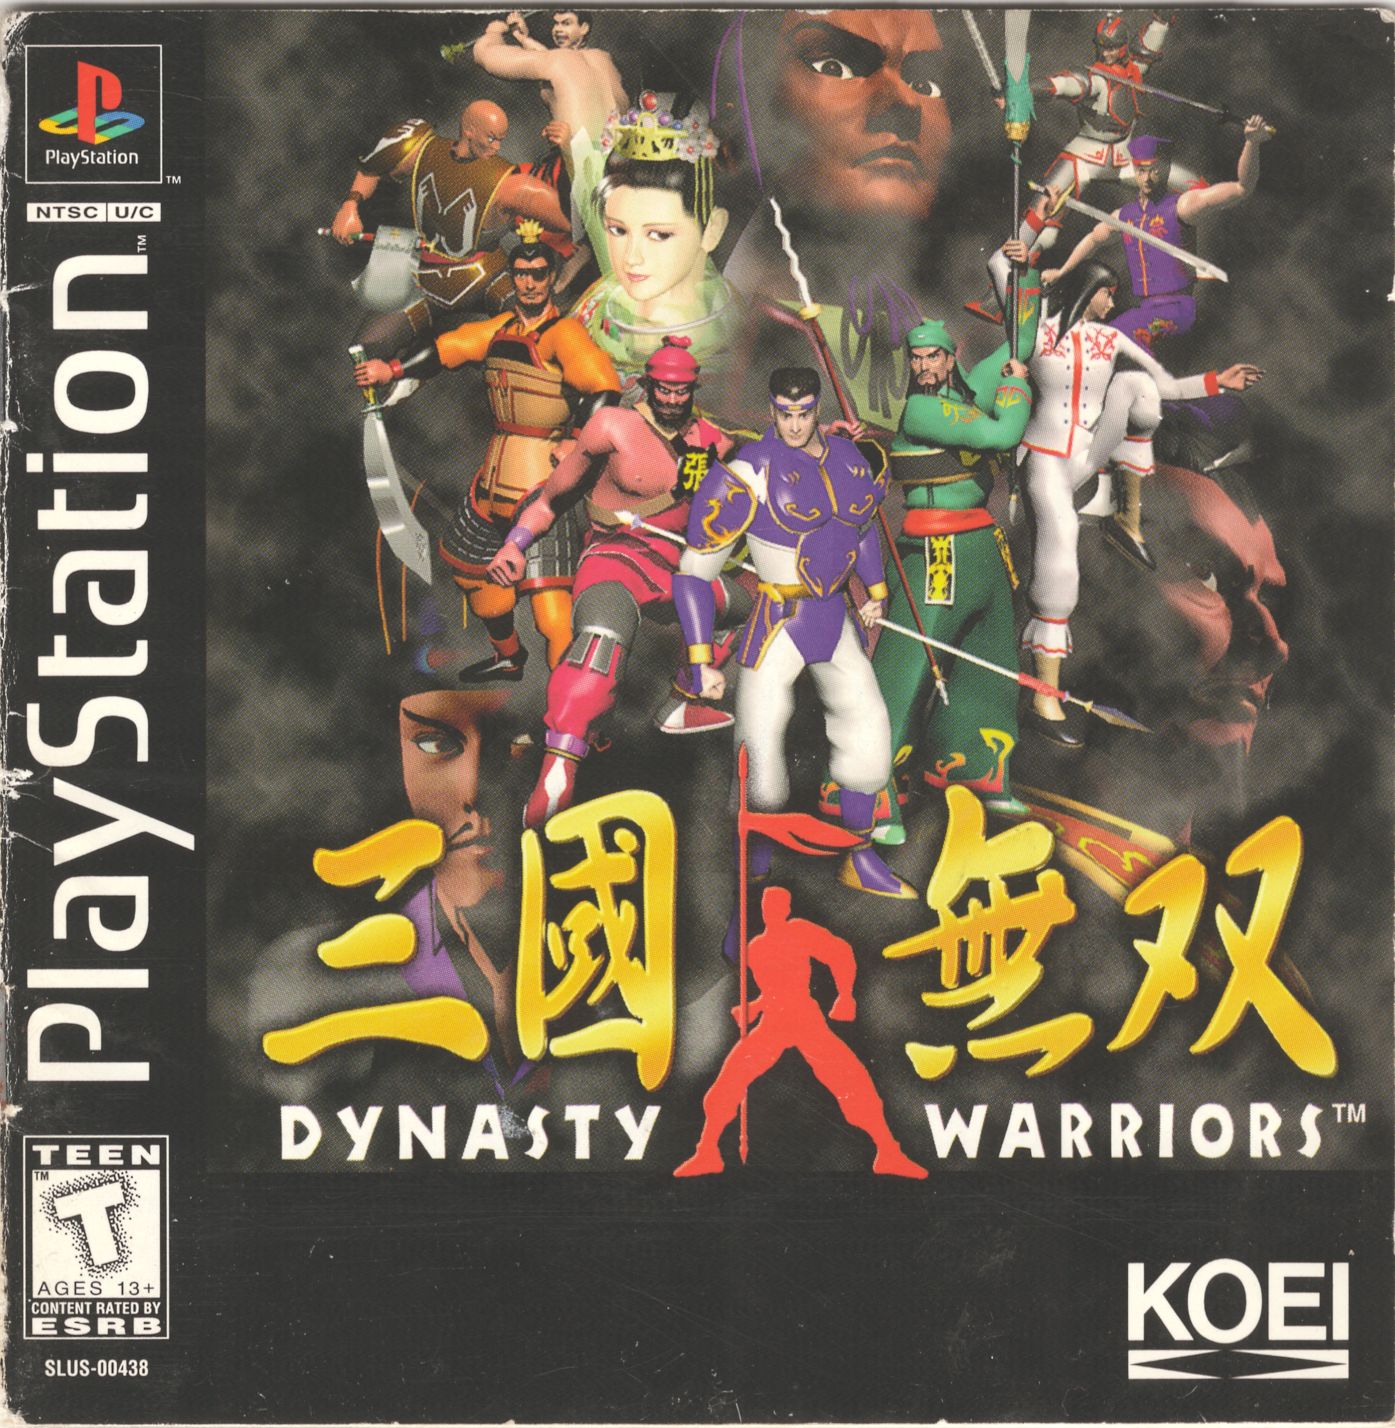 Dragon Warrior Vii Disc1of2 Slus 016 Rom Playstation Ps1 Emulator Games